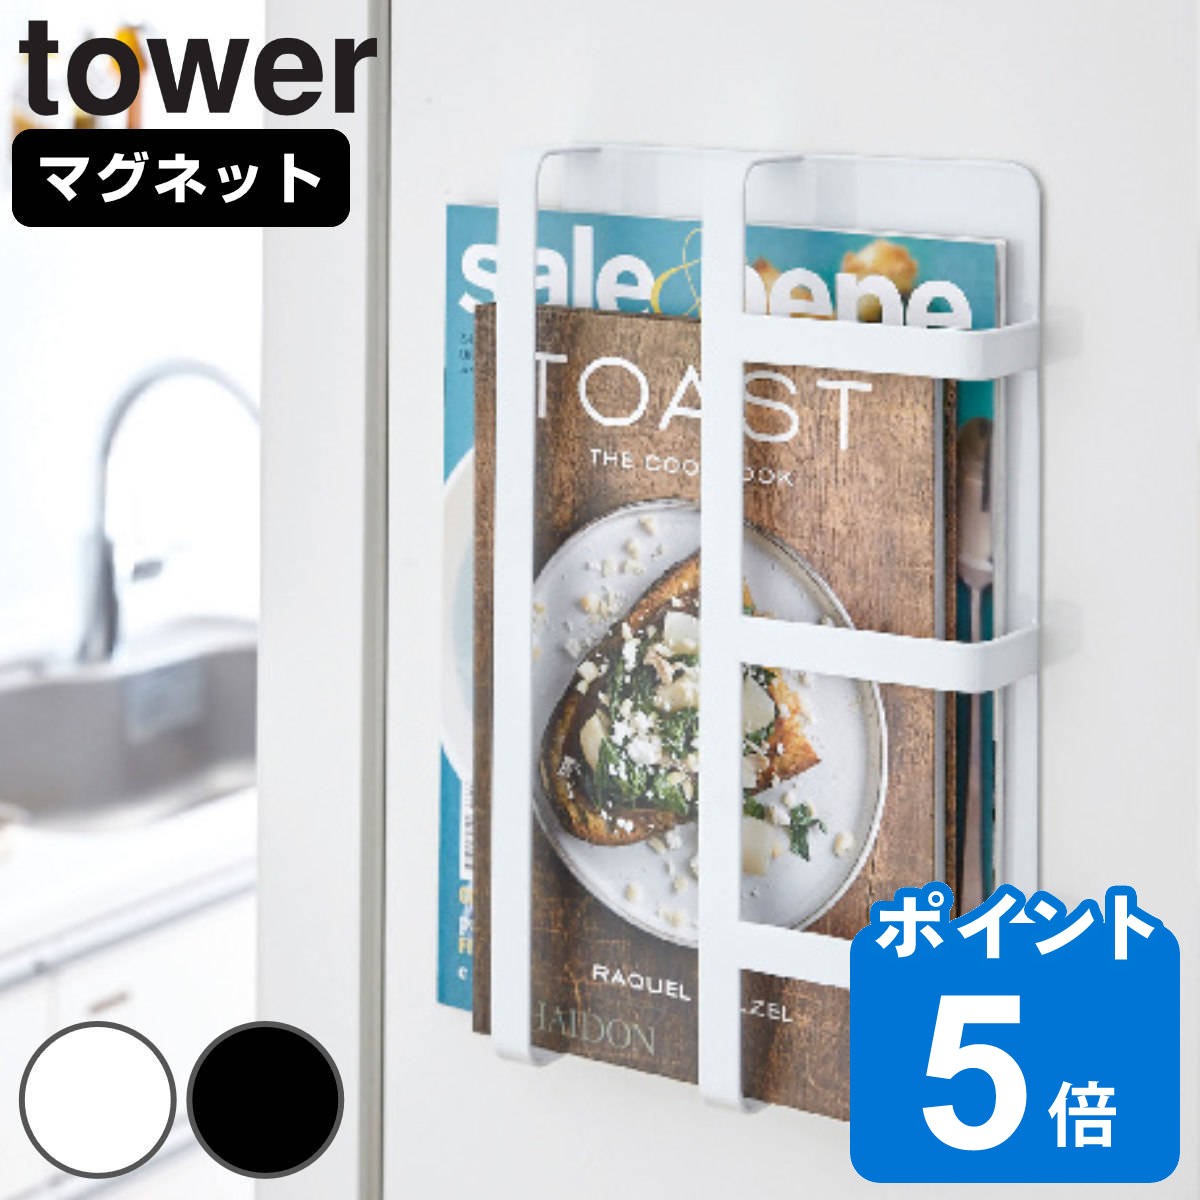 tower }Olbg①ɃTChVsbN ^[